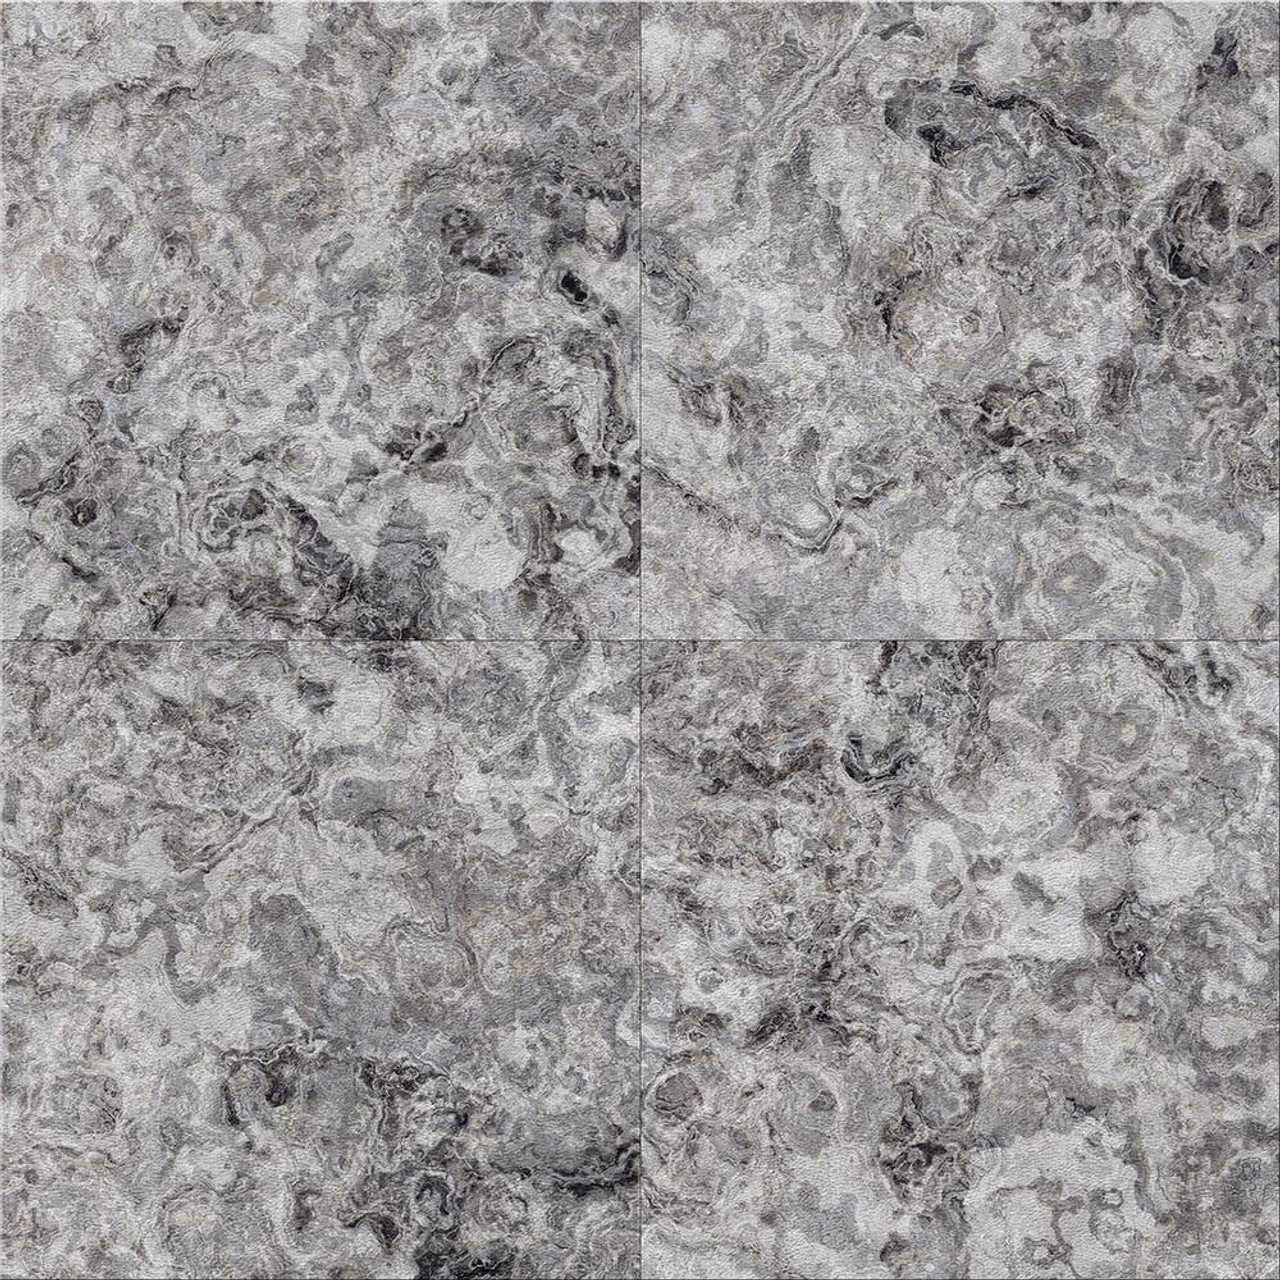 Perfection Floor Tile Natural Stone - Breccia Argento or 6 Tiles/ Case or 16.62 SQFT/ Case